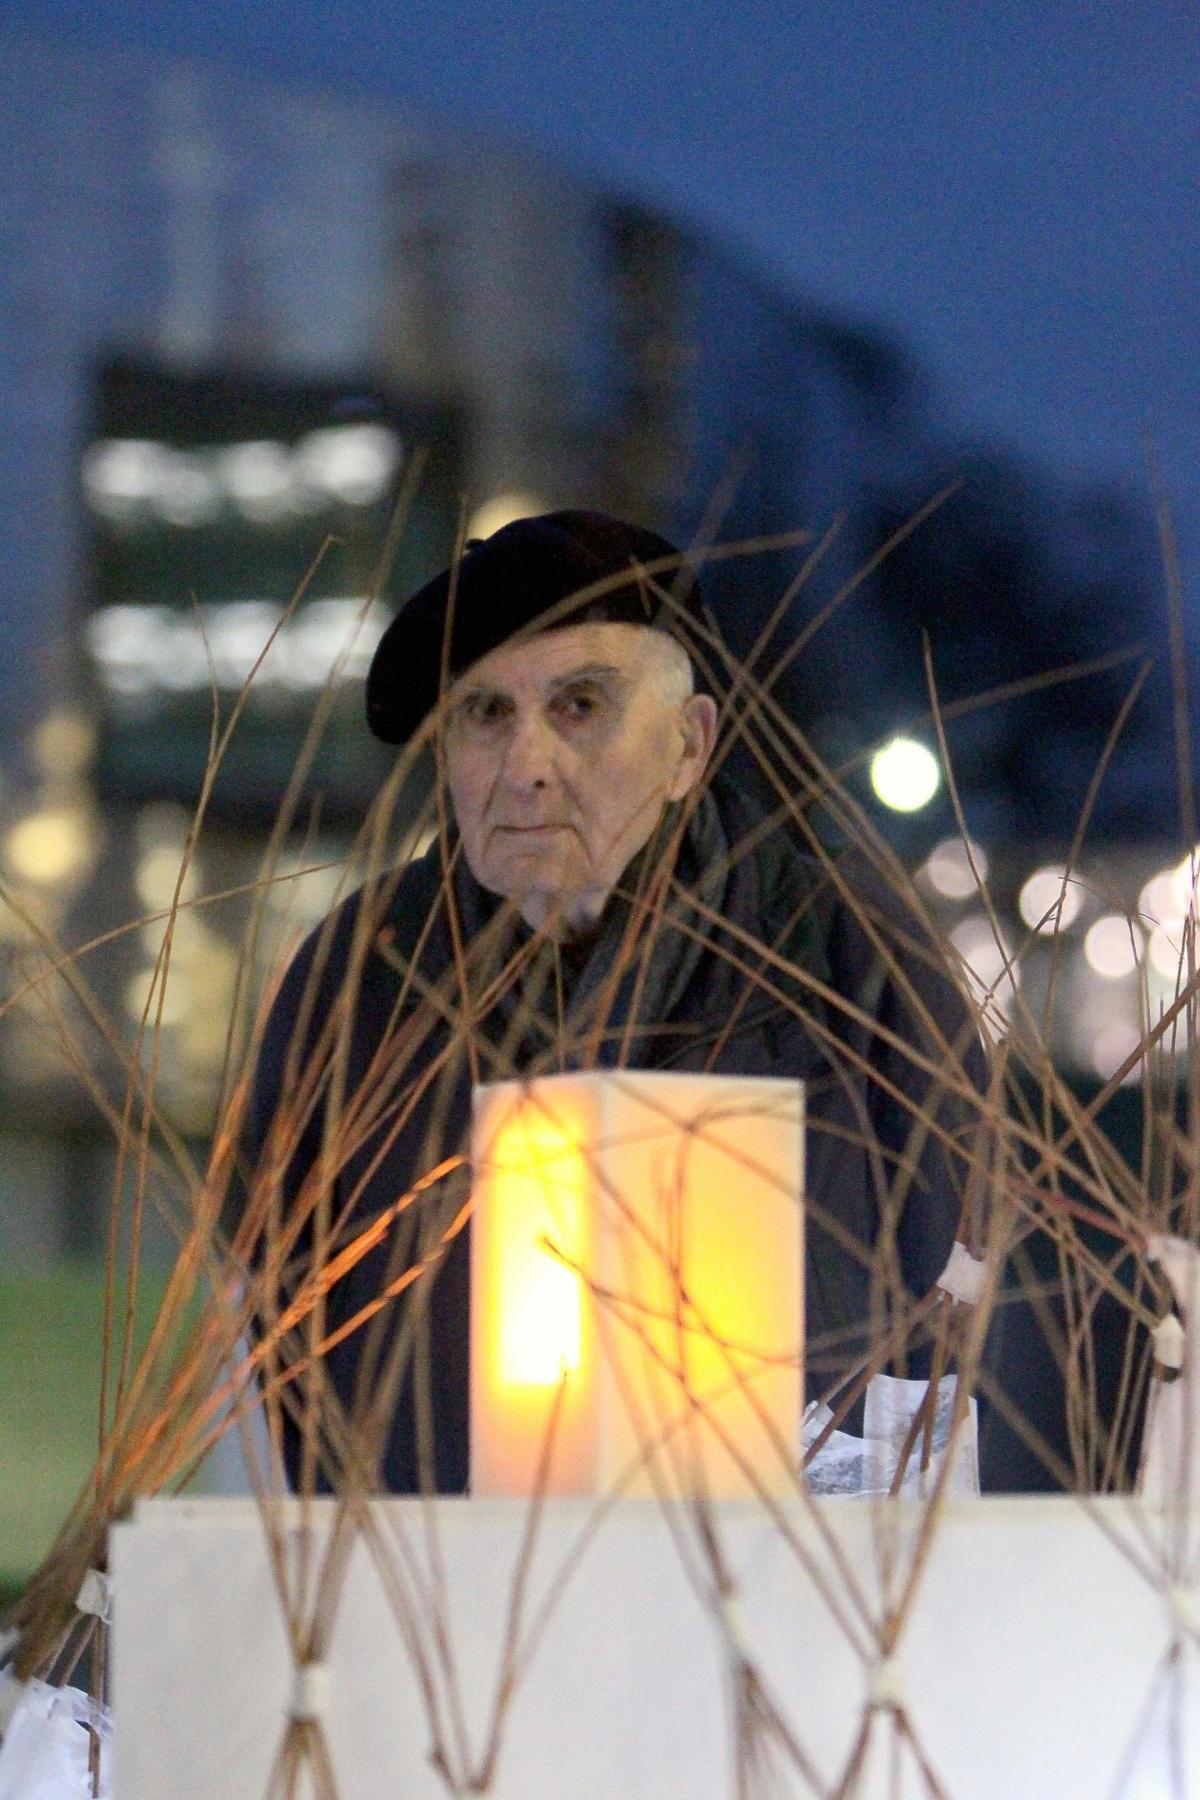 Holocaust surviver Frank Bright at a memorial at Essex University